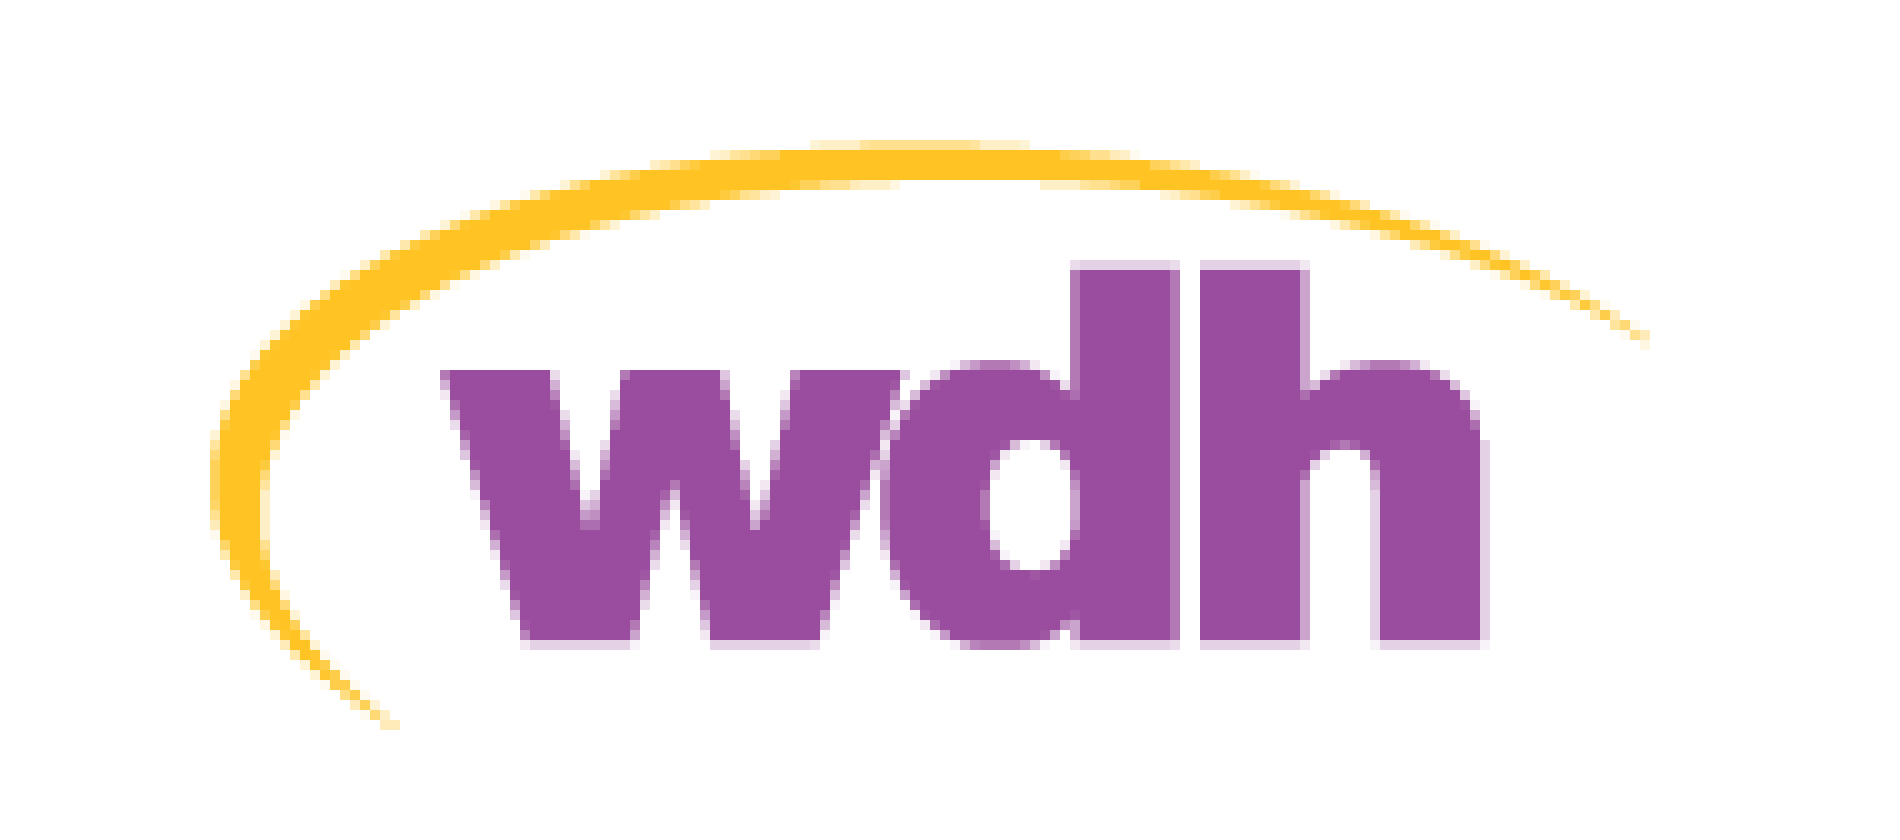 WDH